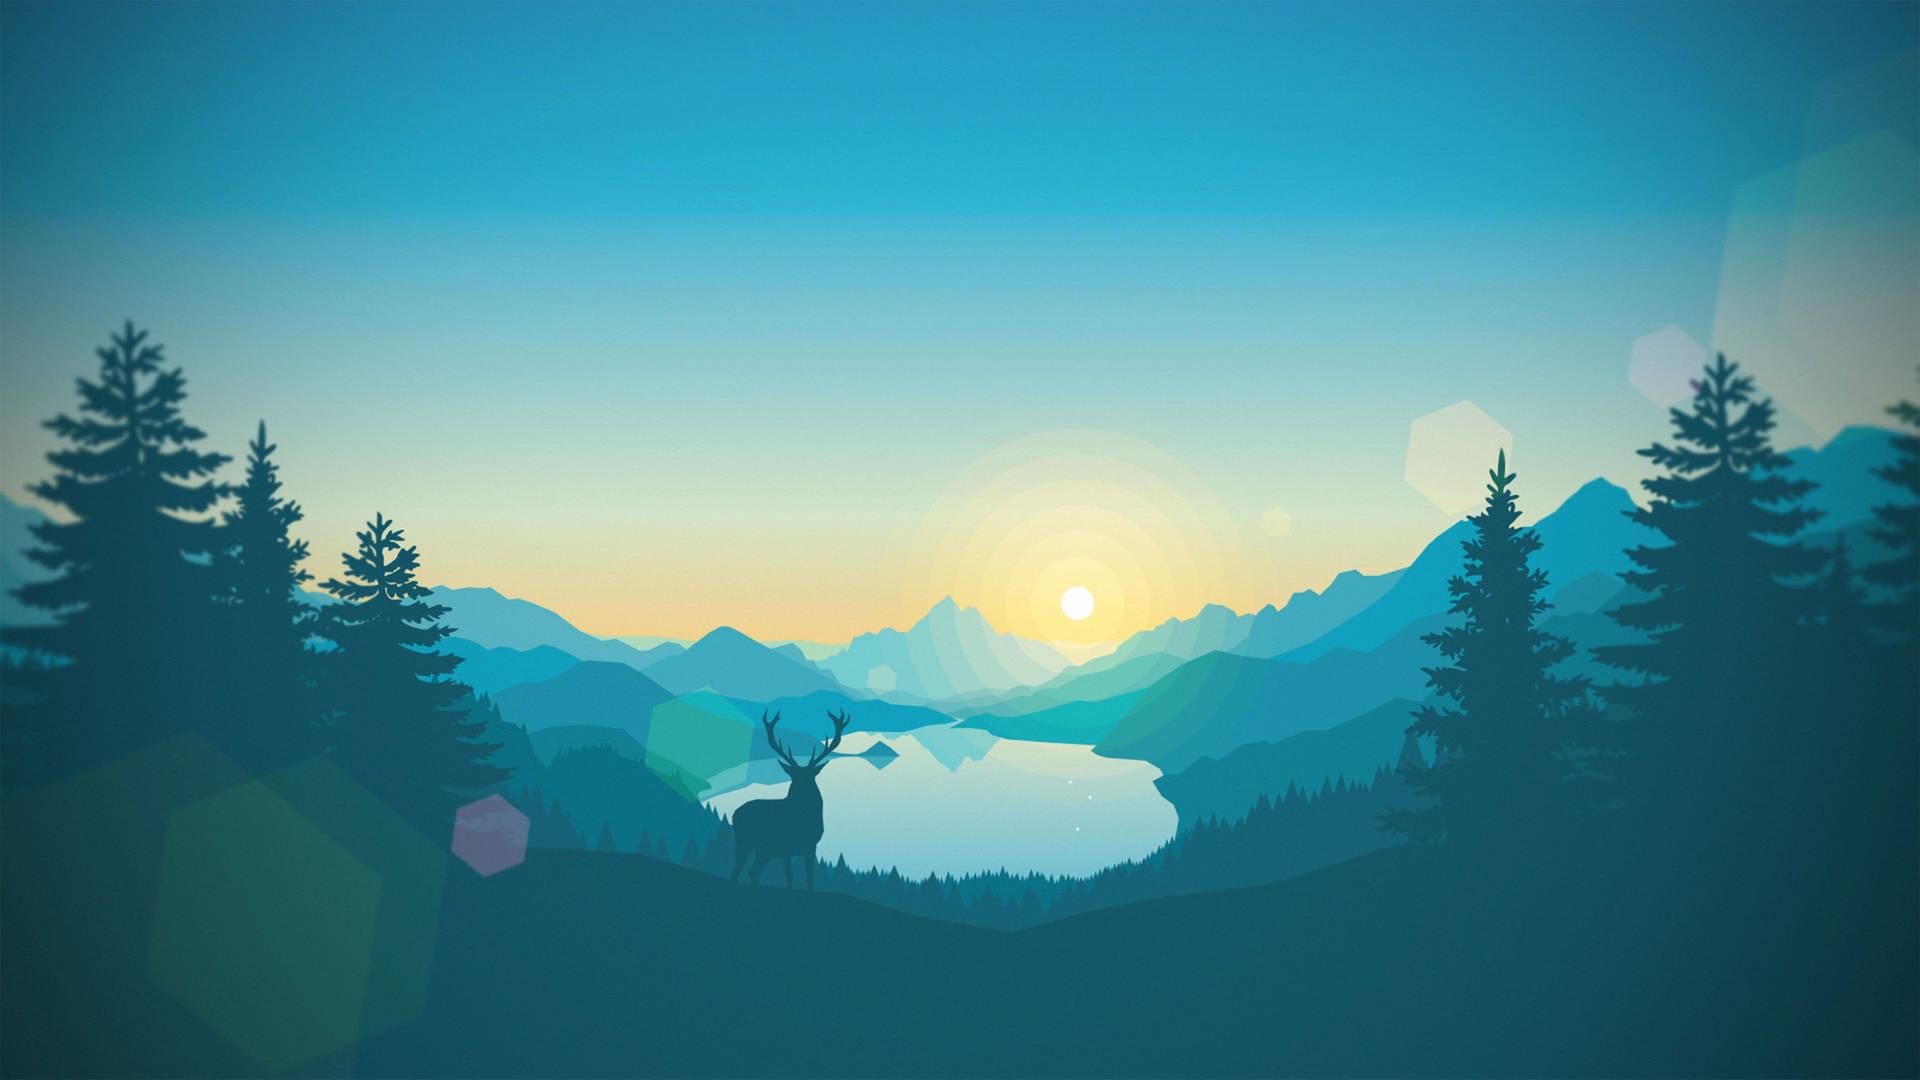 4K Firewatch Deer In Blue-Green Forest Wallpaper